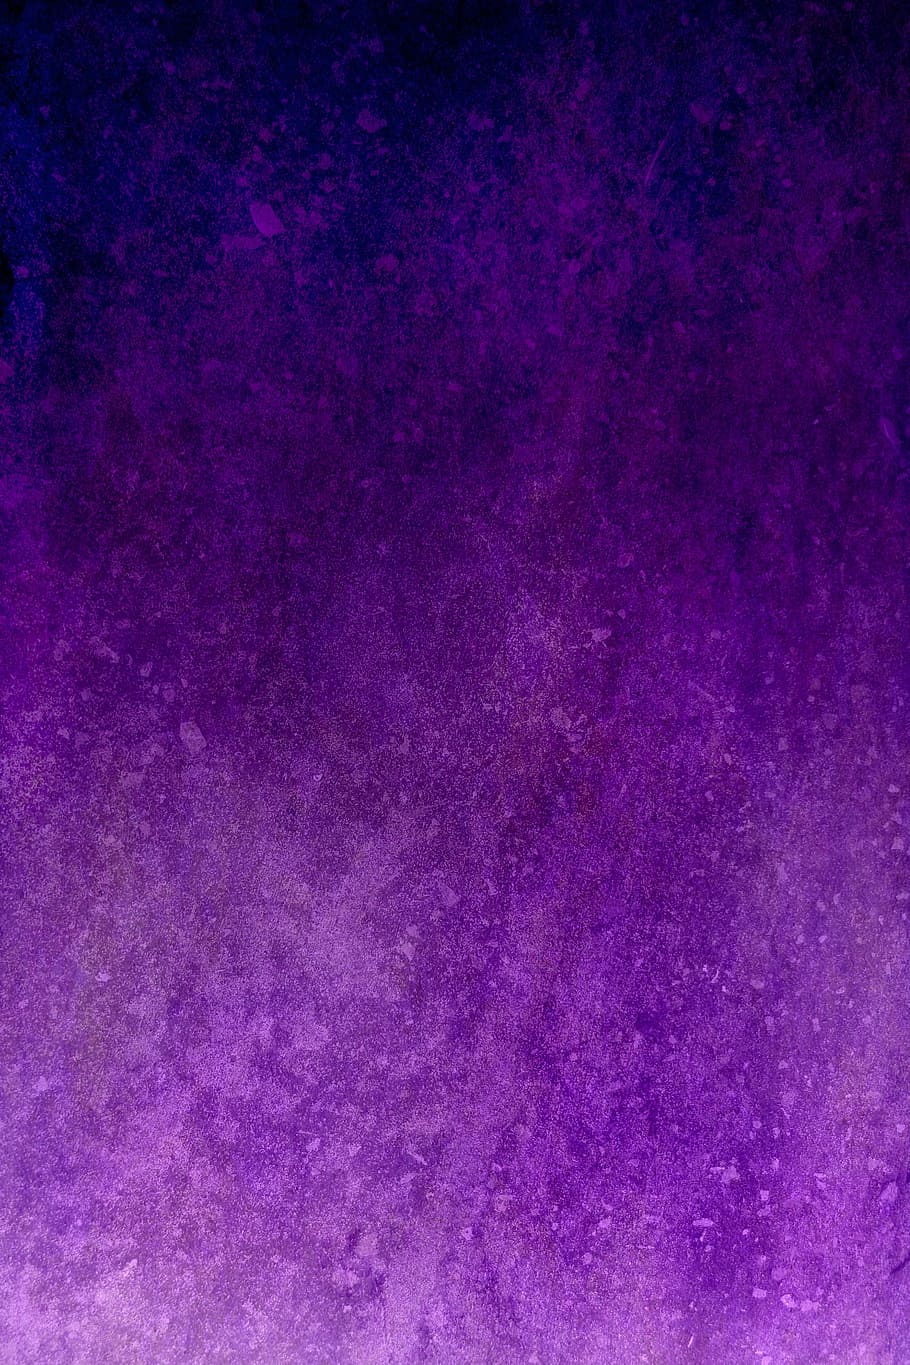 superficie púrpura, púrpura, fondo, grunge, textura, tela, gótico, violeta, ciruela, oscuro